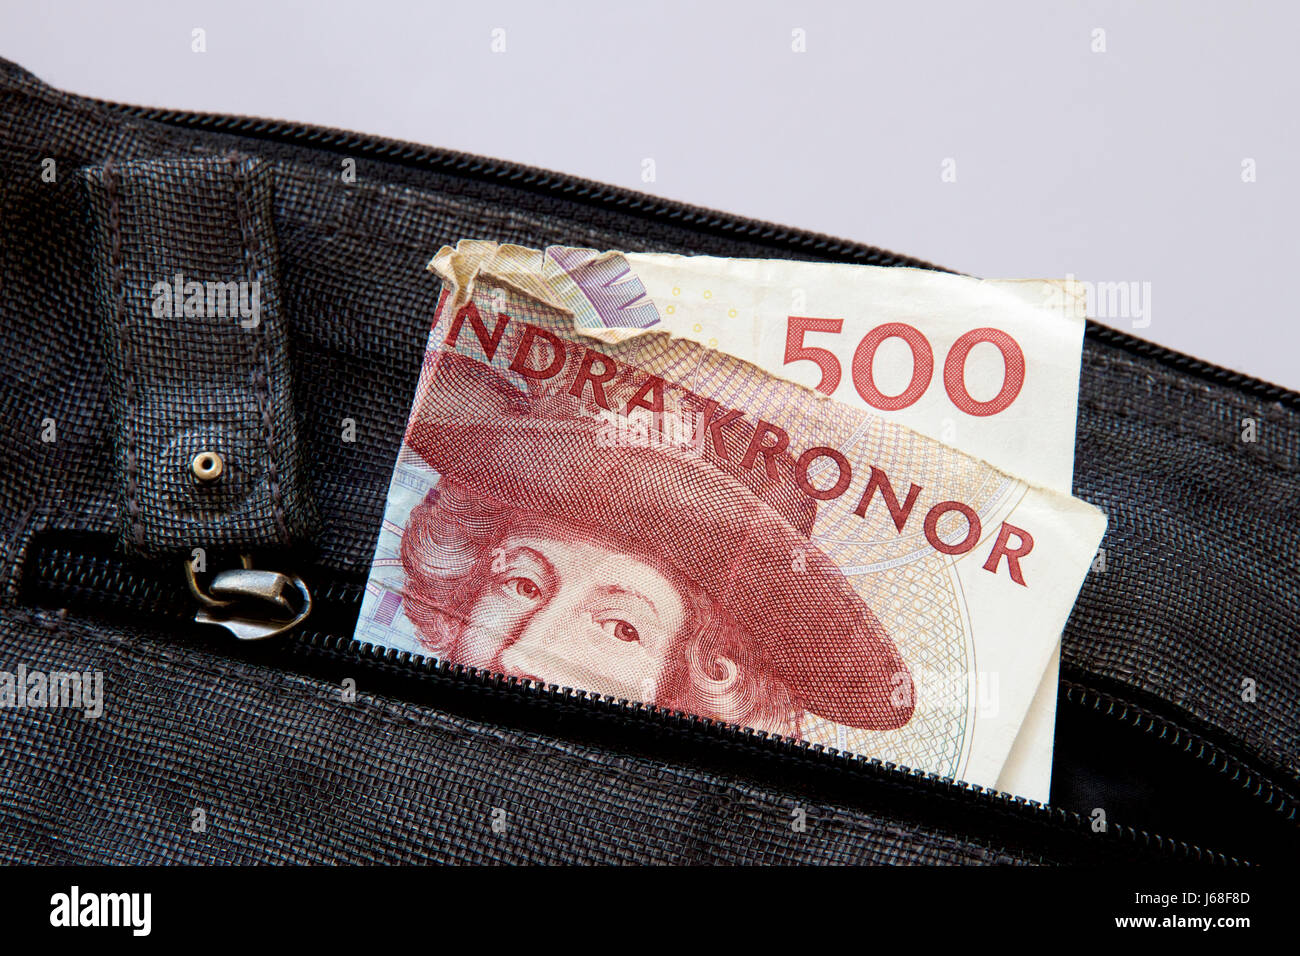 Swedish money in a shopping bag. Stock Photo